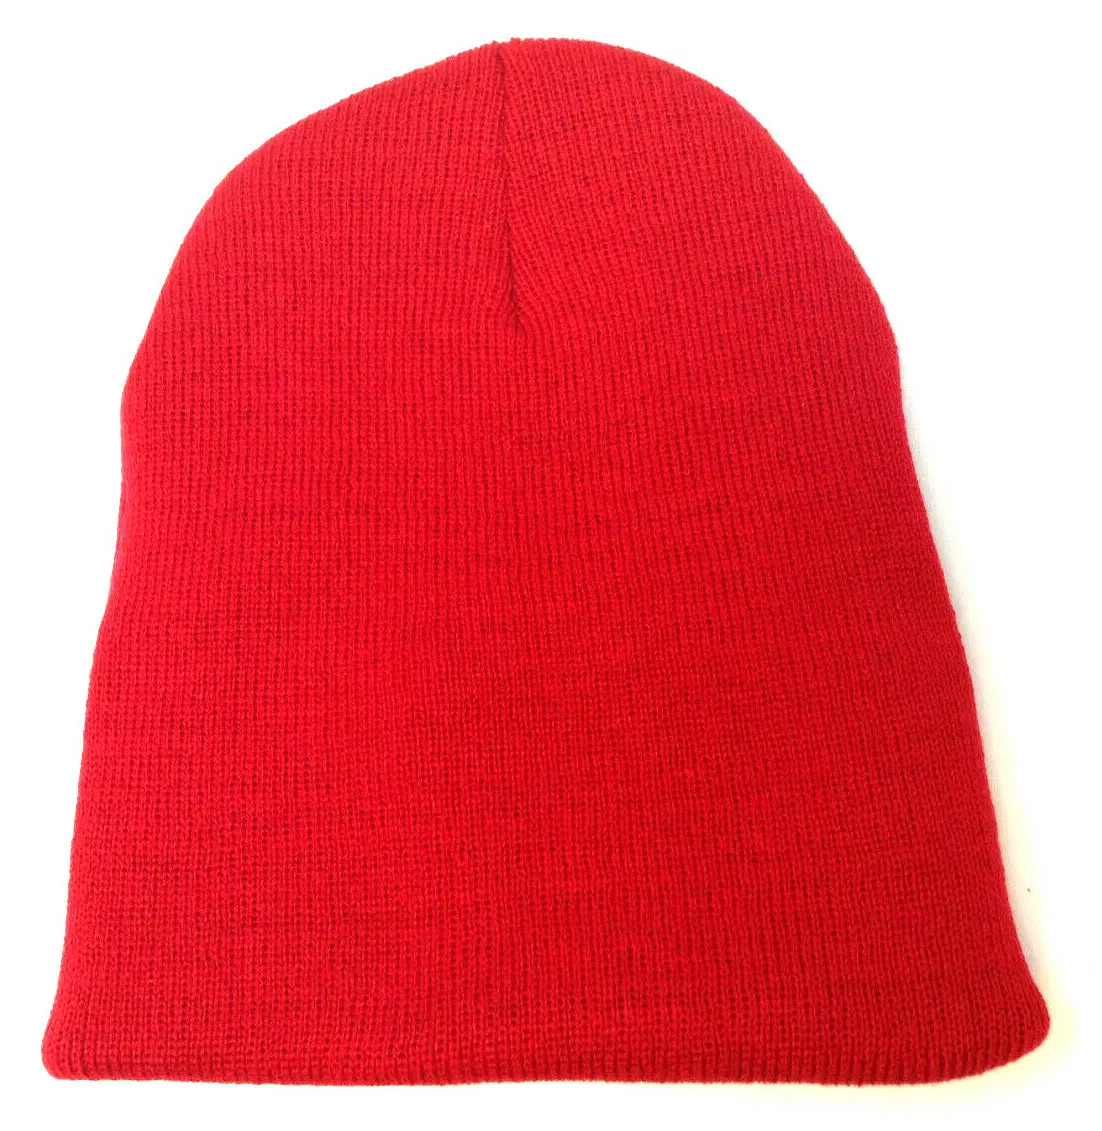 Solid Plain Blank Short Uncuffed Knit Beanie skull cap ski Hat retro Red - $16.99